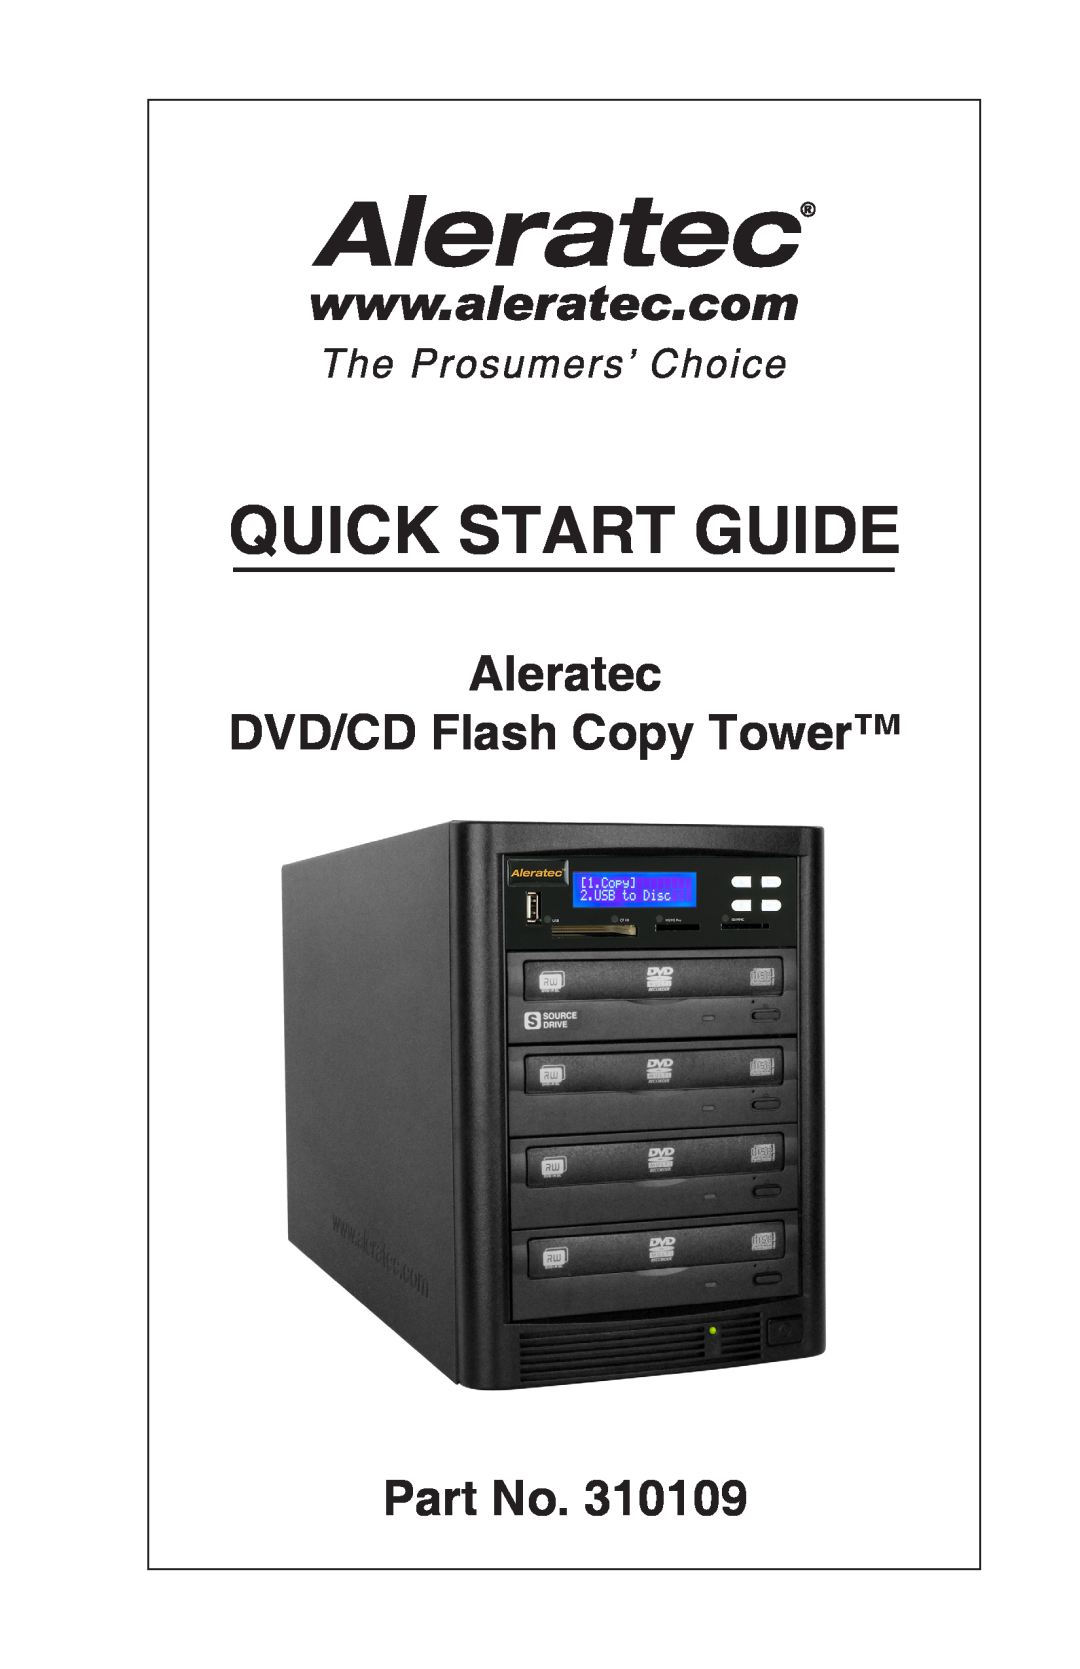 Aleratec 310109 quick start Quick Start Guide, Aleratec DVD/CD Flash Copy Tower 